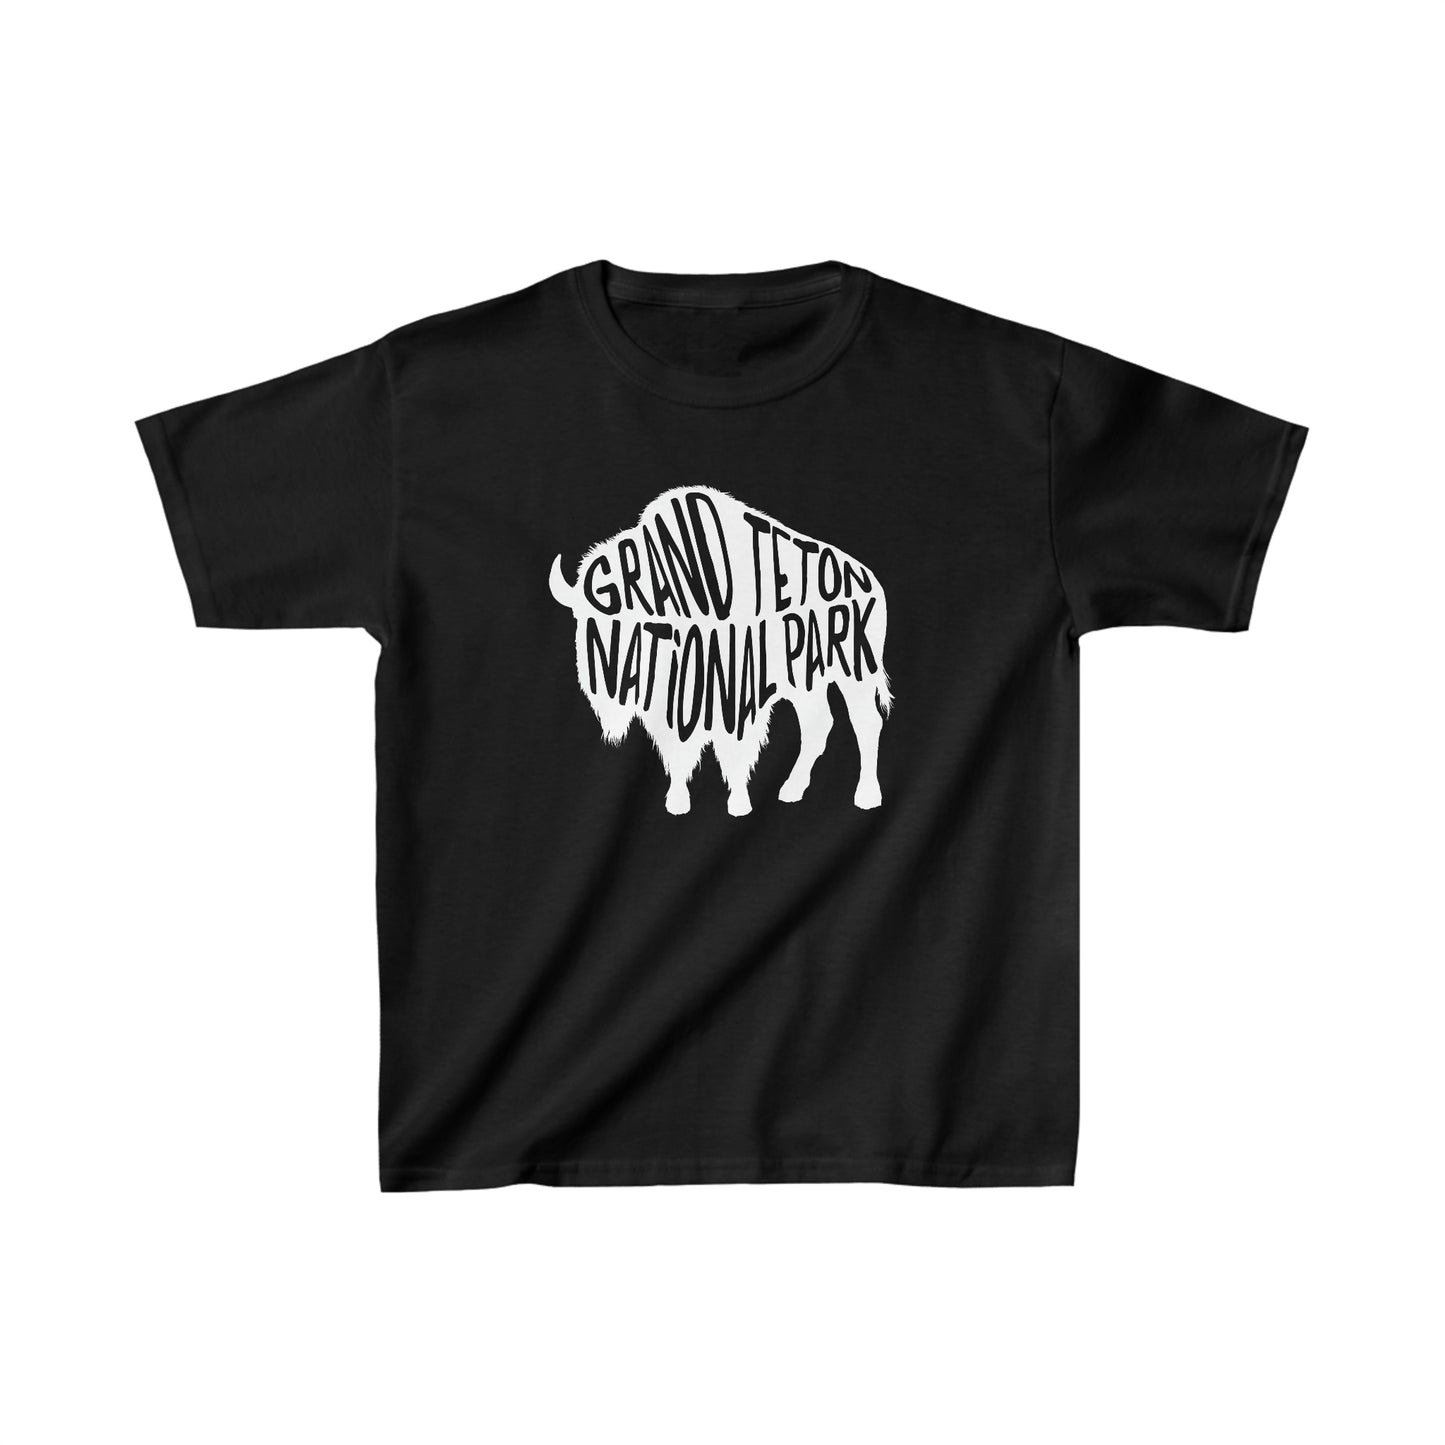 Grand Teton National Park Child T-Shirt - Bison Chunky Text Design